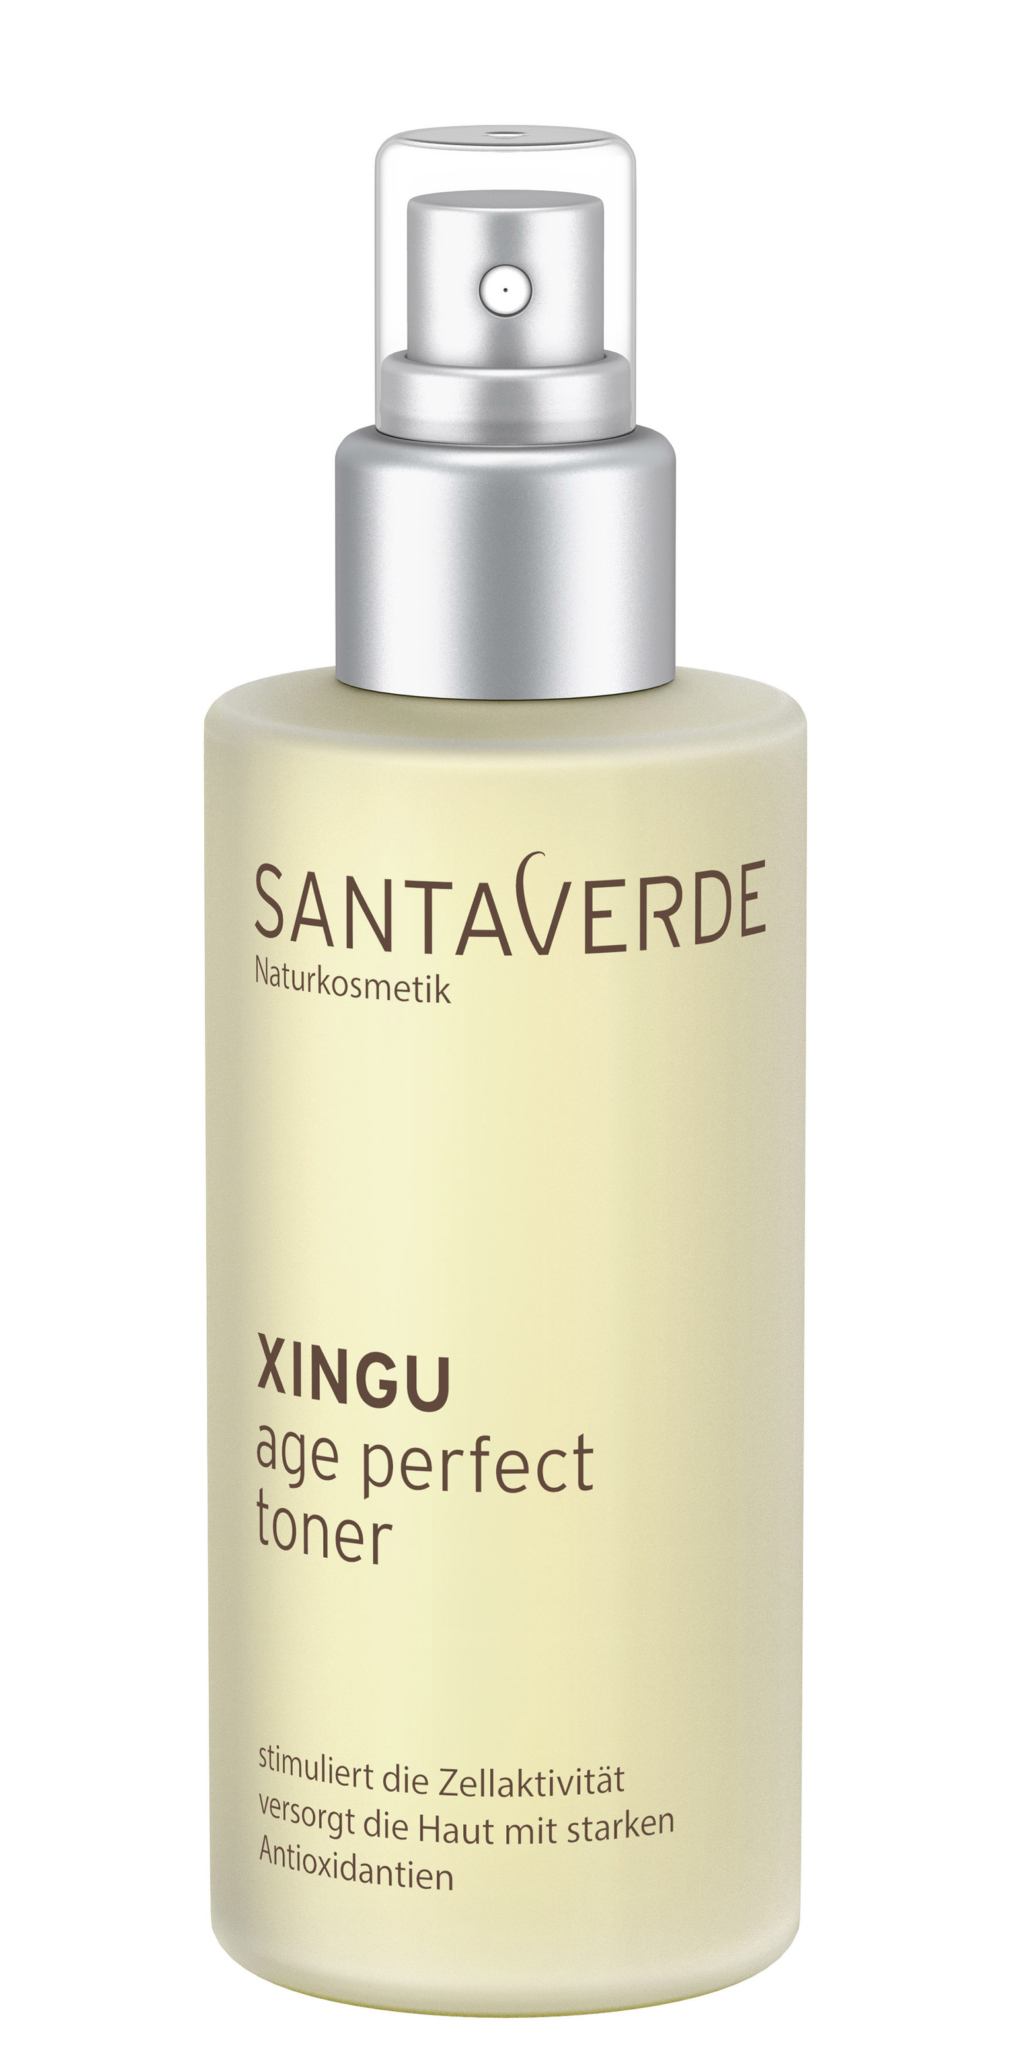 Santaverde Naturkosmetik Xingu Age Perfect Toner